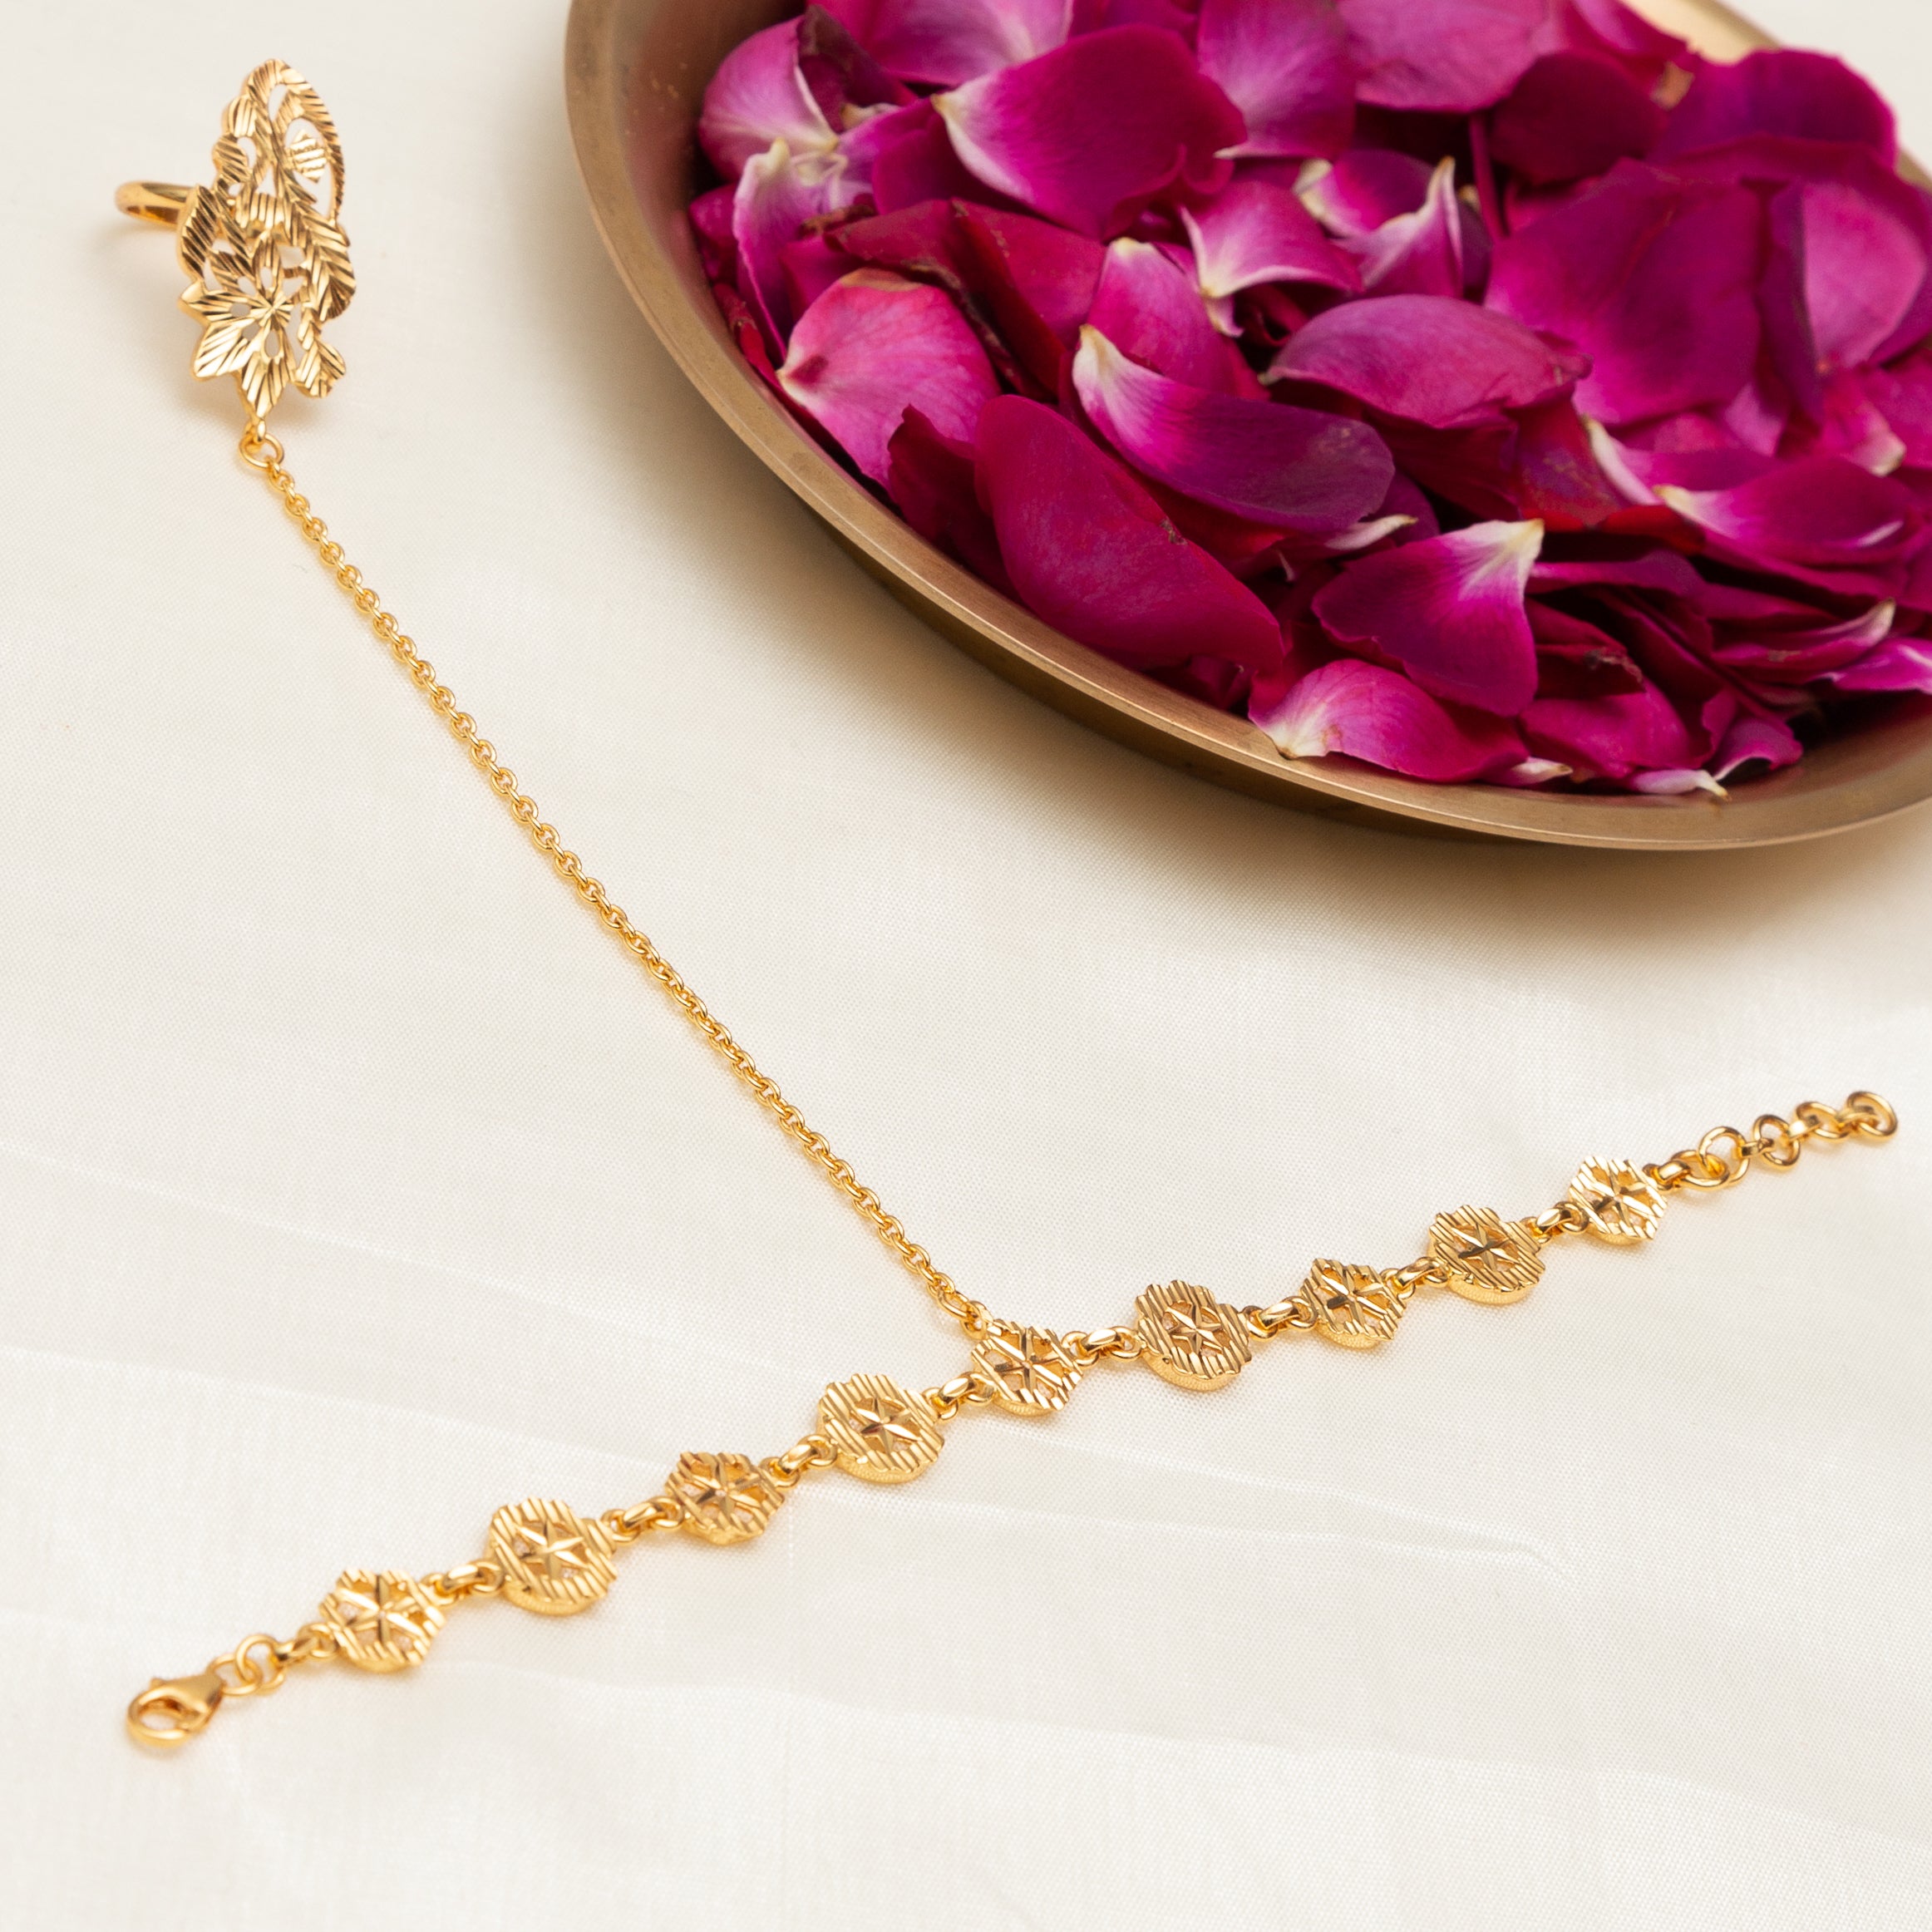 22k yellow gold handmade fabulous vintage elephant face design bangle  bracelet kada certified hallmarked jewelry for girls women's gk04 | TRIBAL  ORNAMENTS